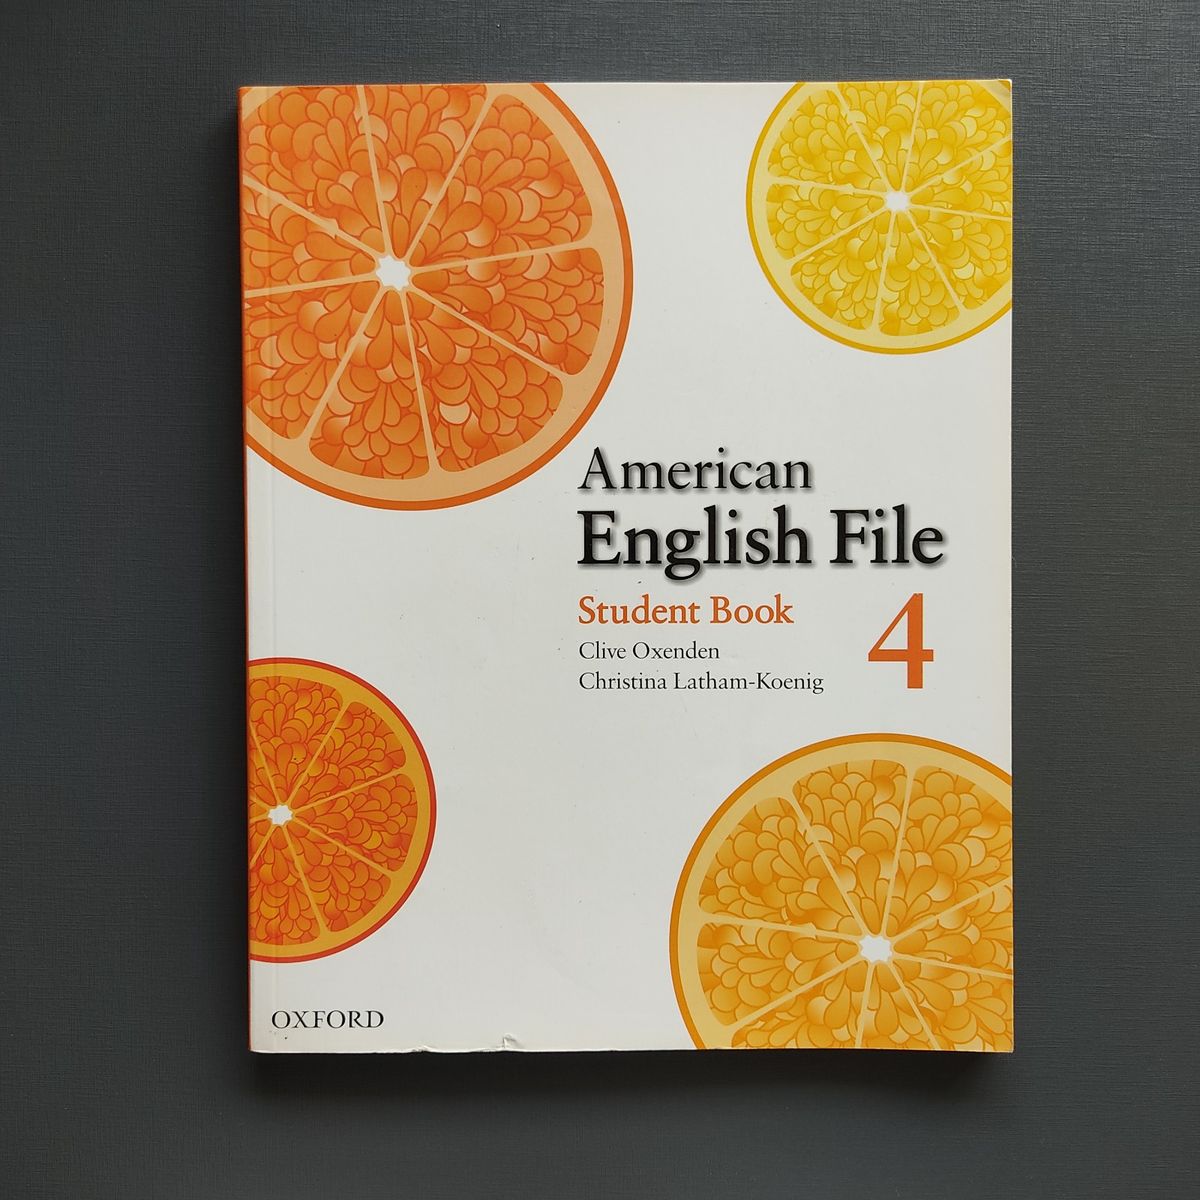 Livro American English File Student Book 4 Livro Oxford Usado 76502927 Enjoei